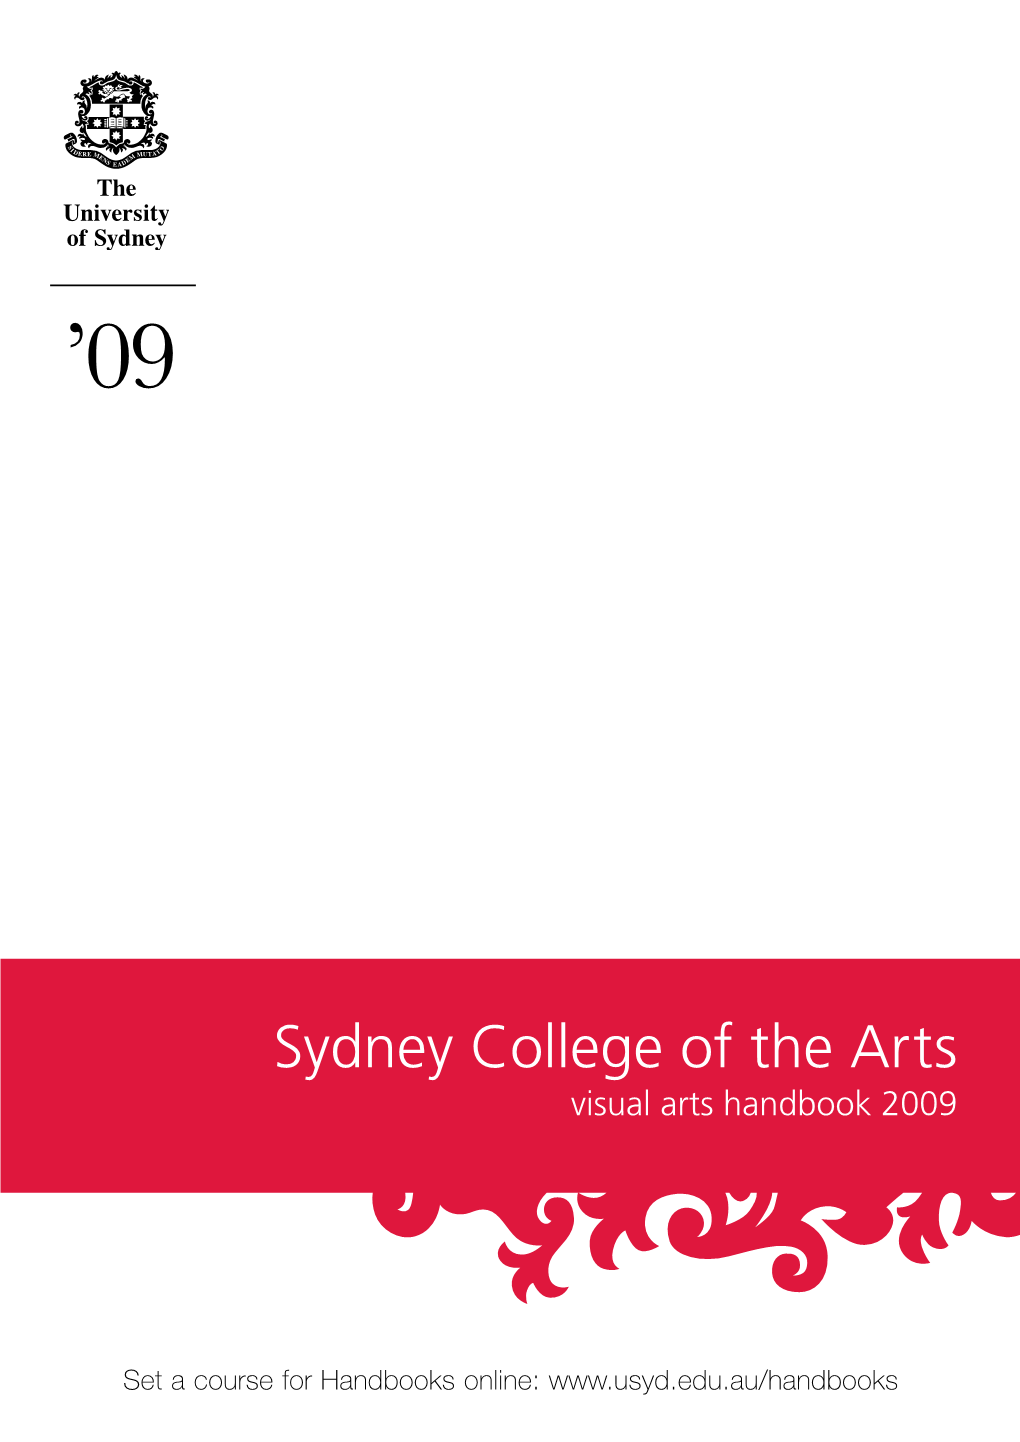 Sydney College of the Arts Visual Arts Handbook 2009